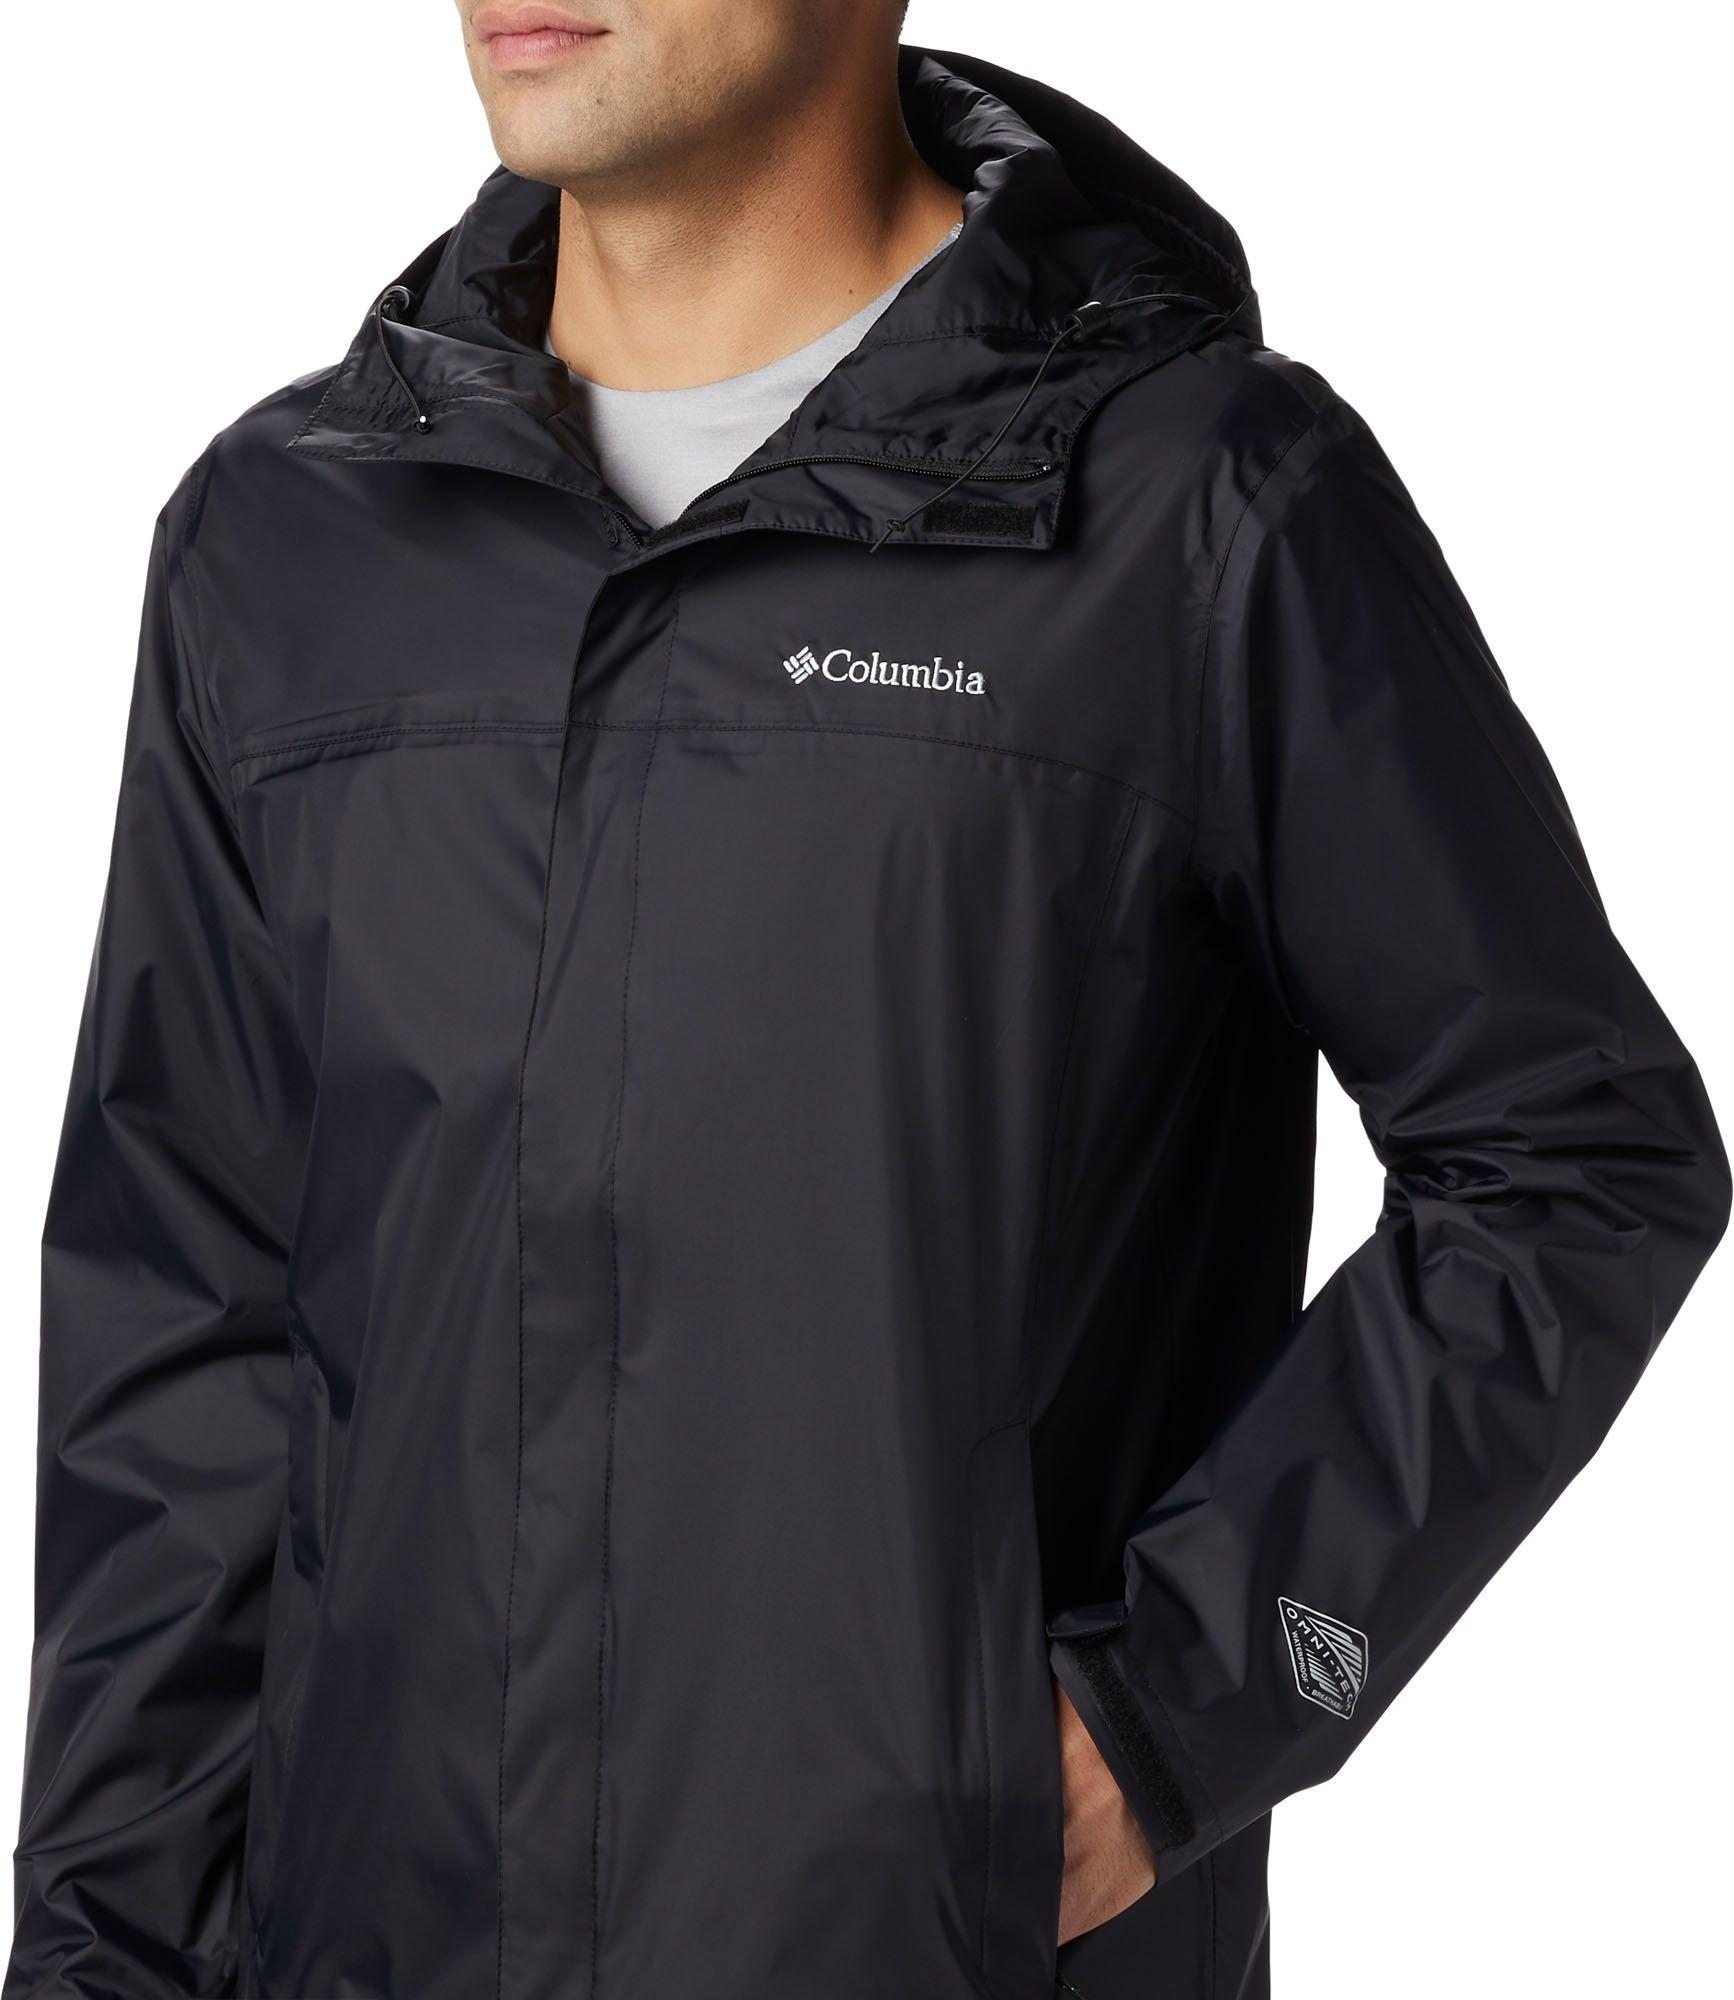 Columbia Synthetic Watertight Ii Rain Jacket in Black for Men - Lyst